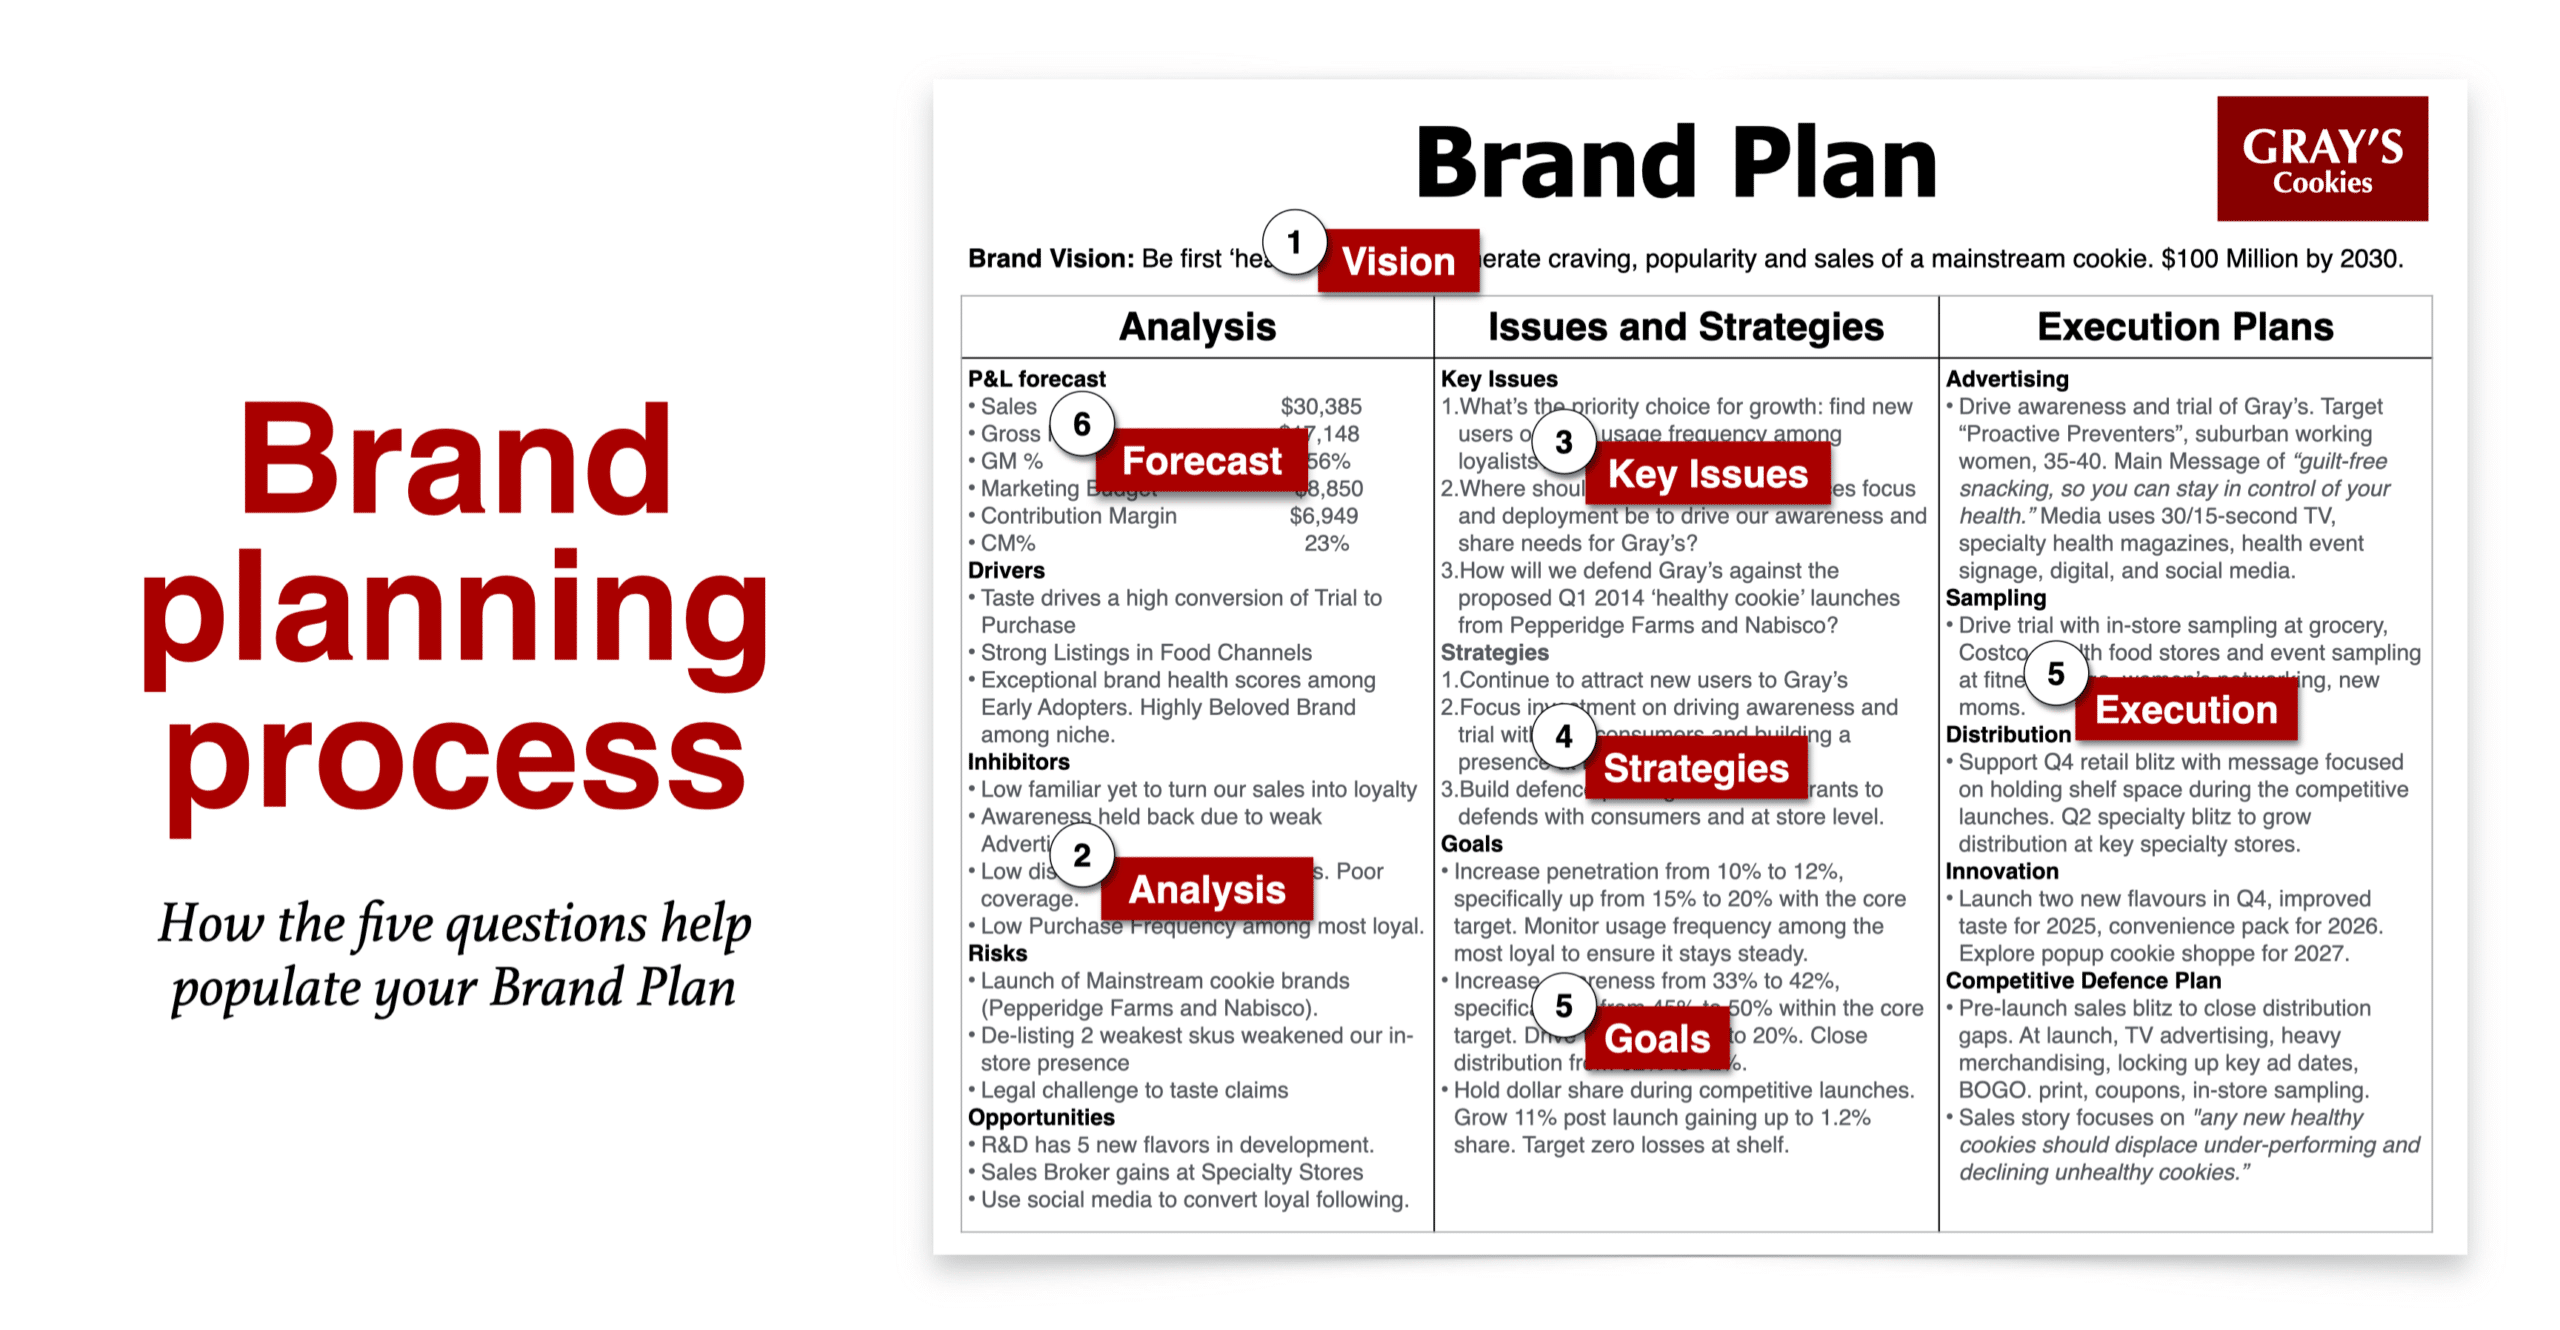 Brand Planning Process